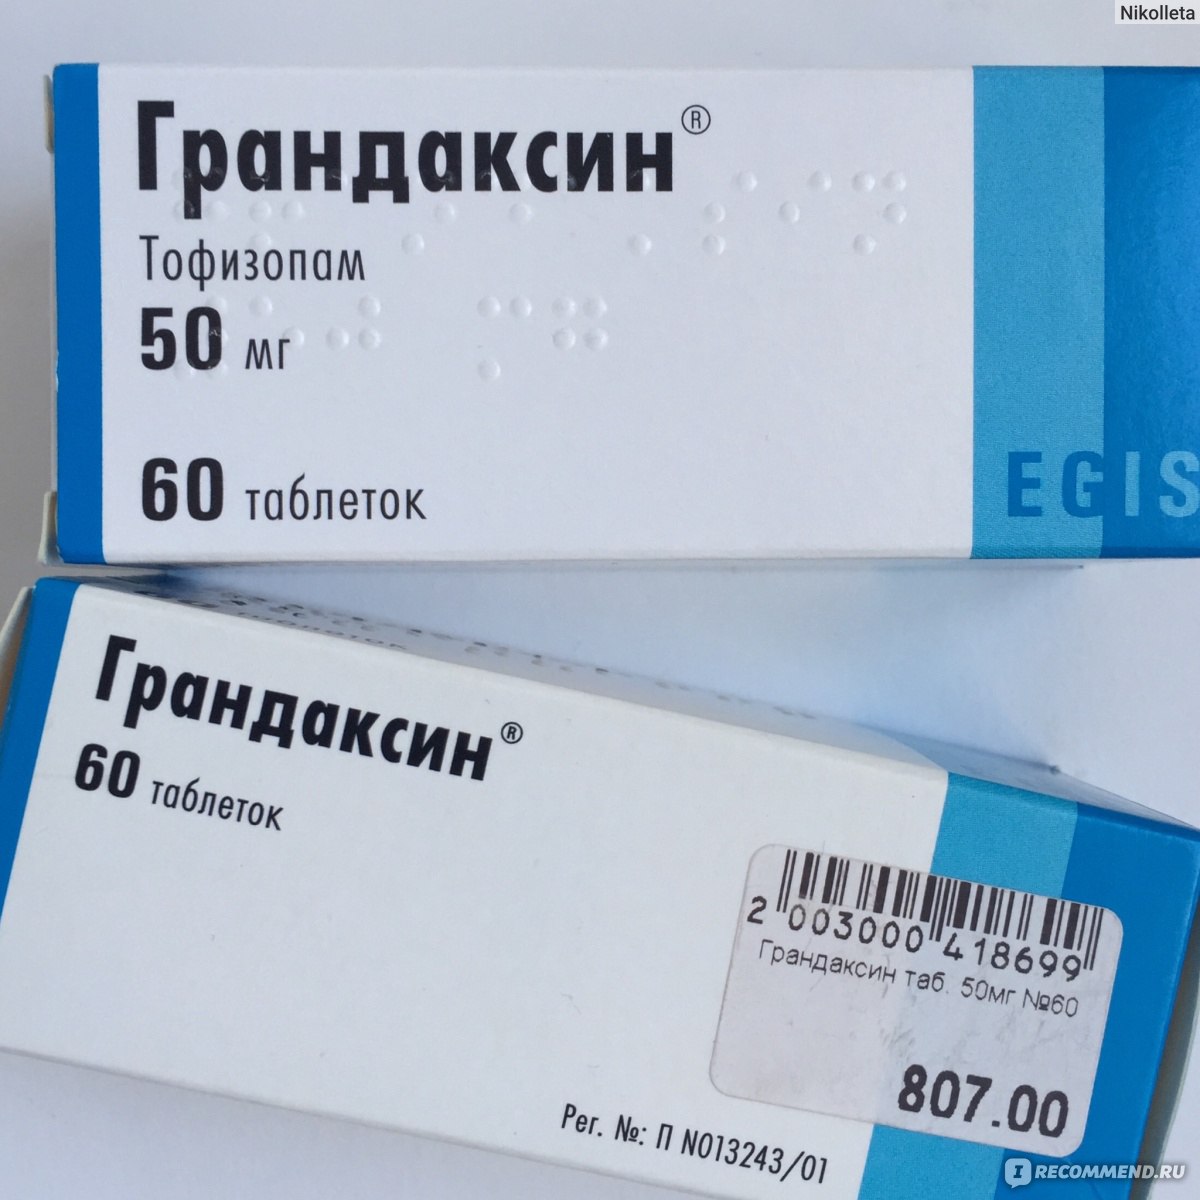 Фармакологическая группа препарата грандаксин. Грандаксин (таб. 50мг n60 Вн ) Egis-Венгрия. Грандаксин 50 мг. Грандаксин таб 50мг 20. Грандаксин Тофизопам 50 мг.